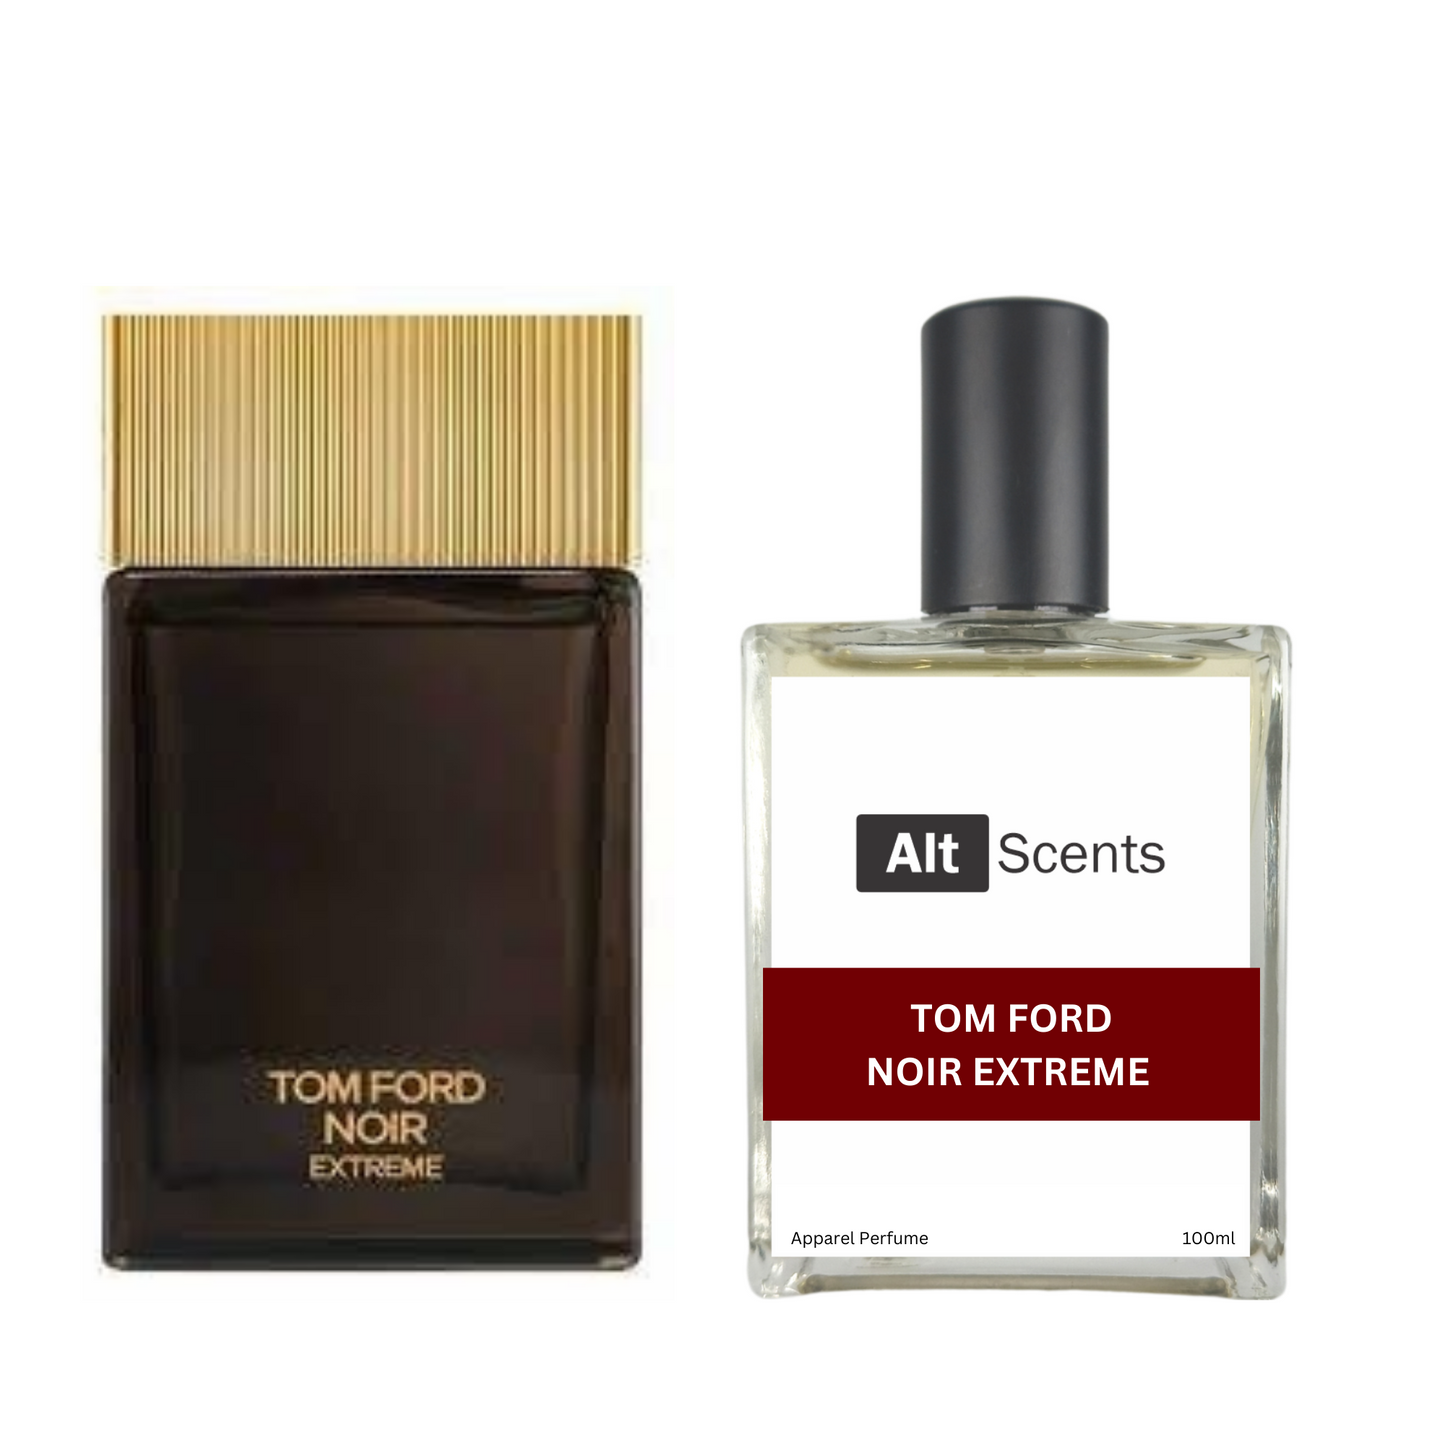 Tom Ford Noir Extreme type Perfume for Unisex